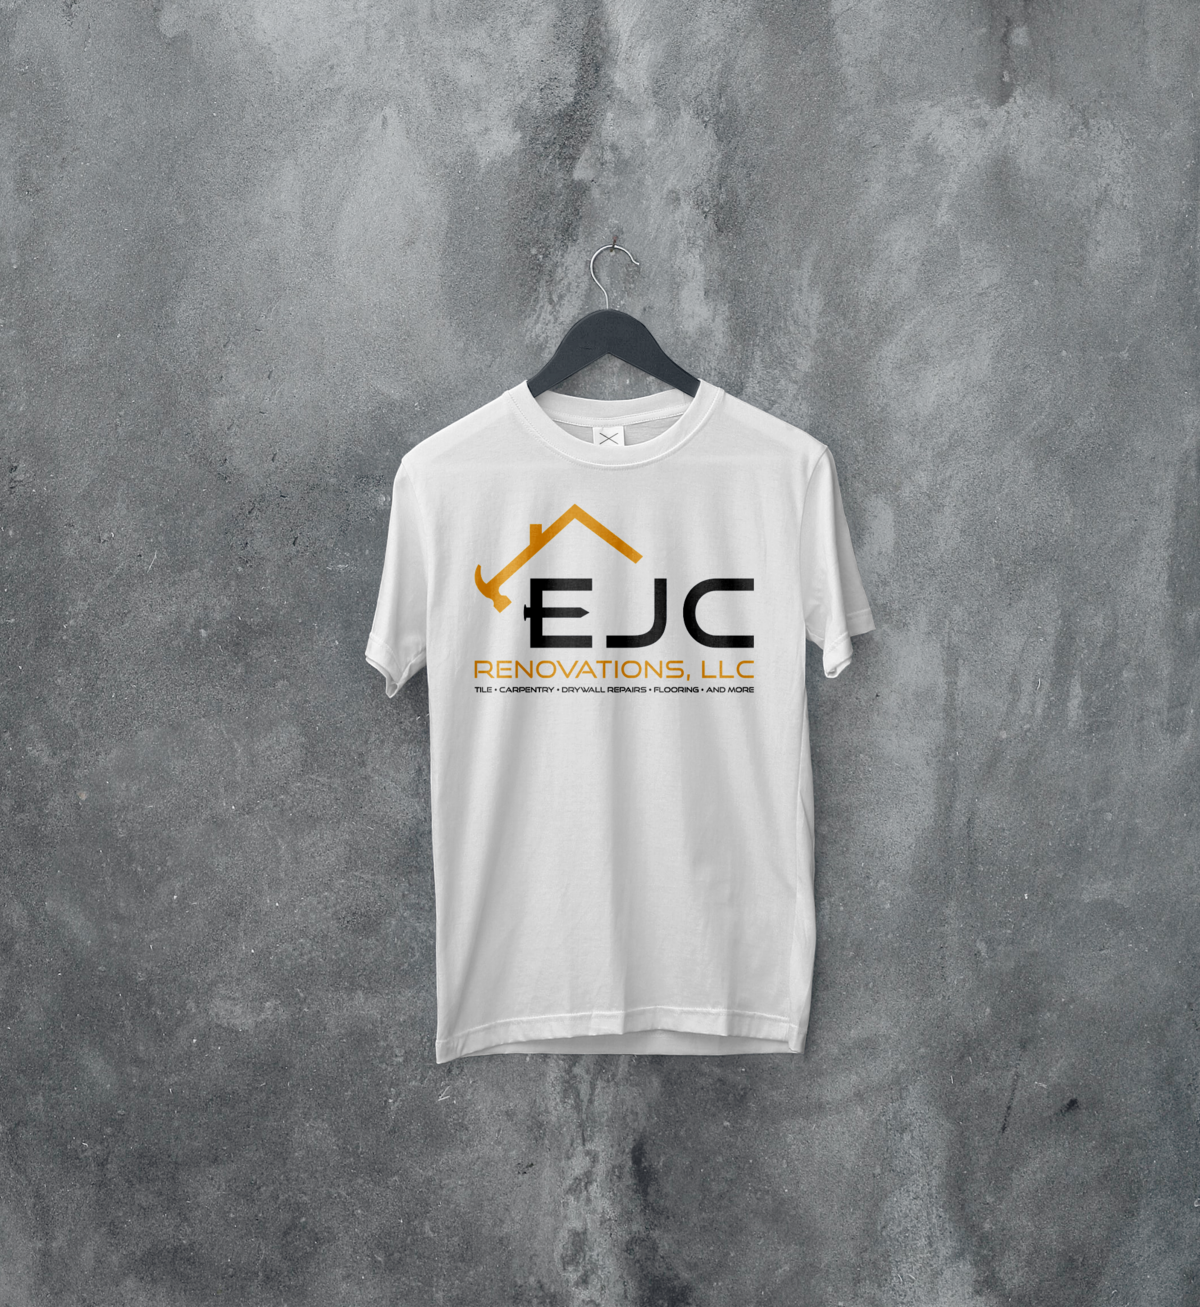 ejc T-Shirt Mockup